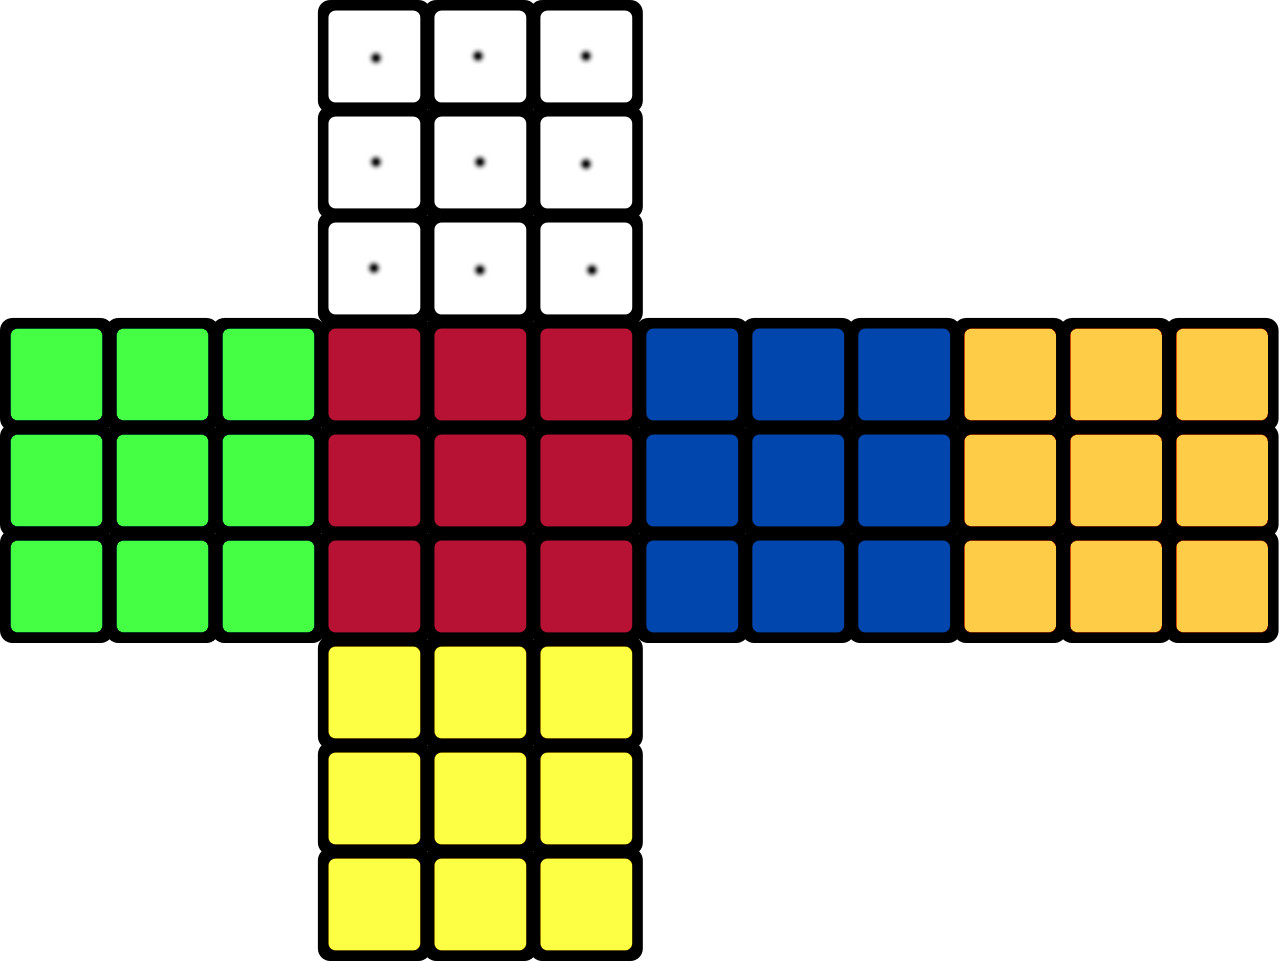 Netz des Rubiks-Cube